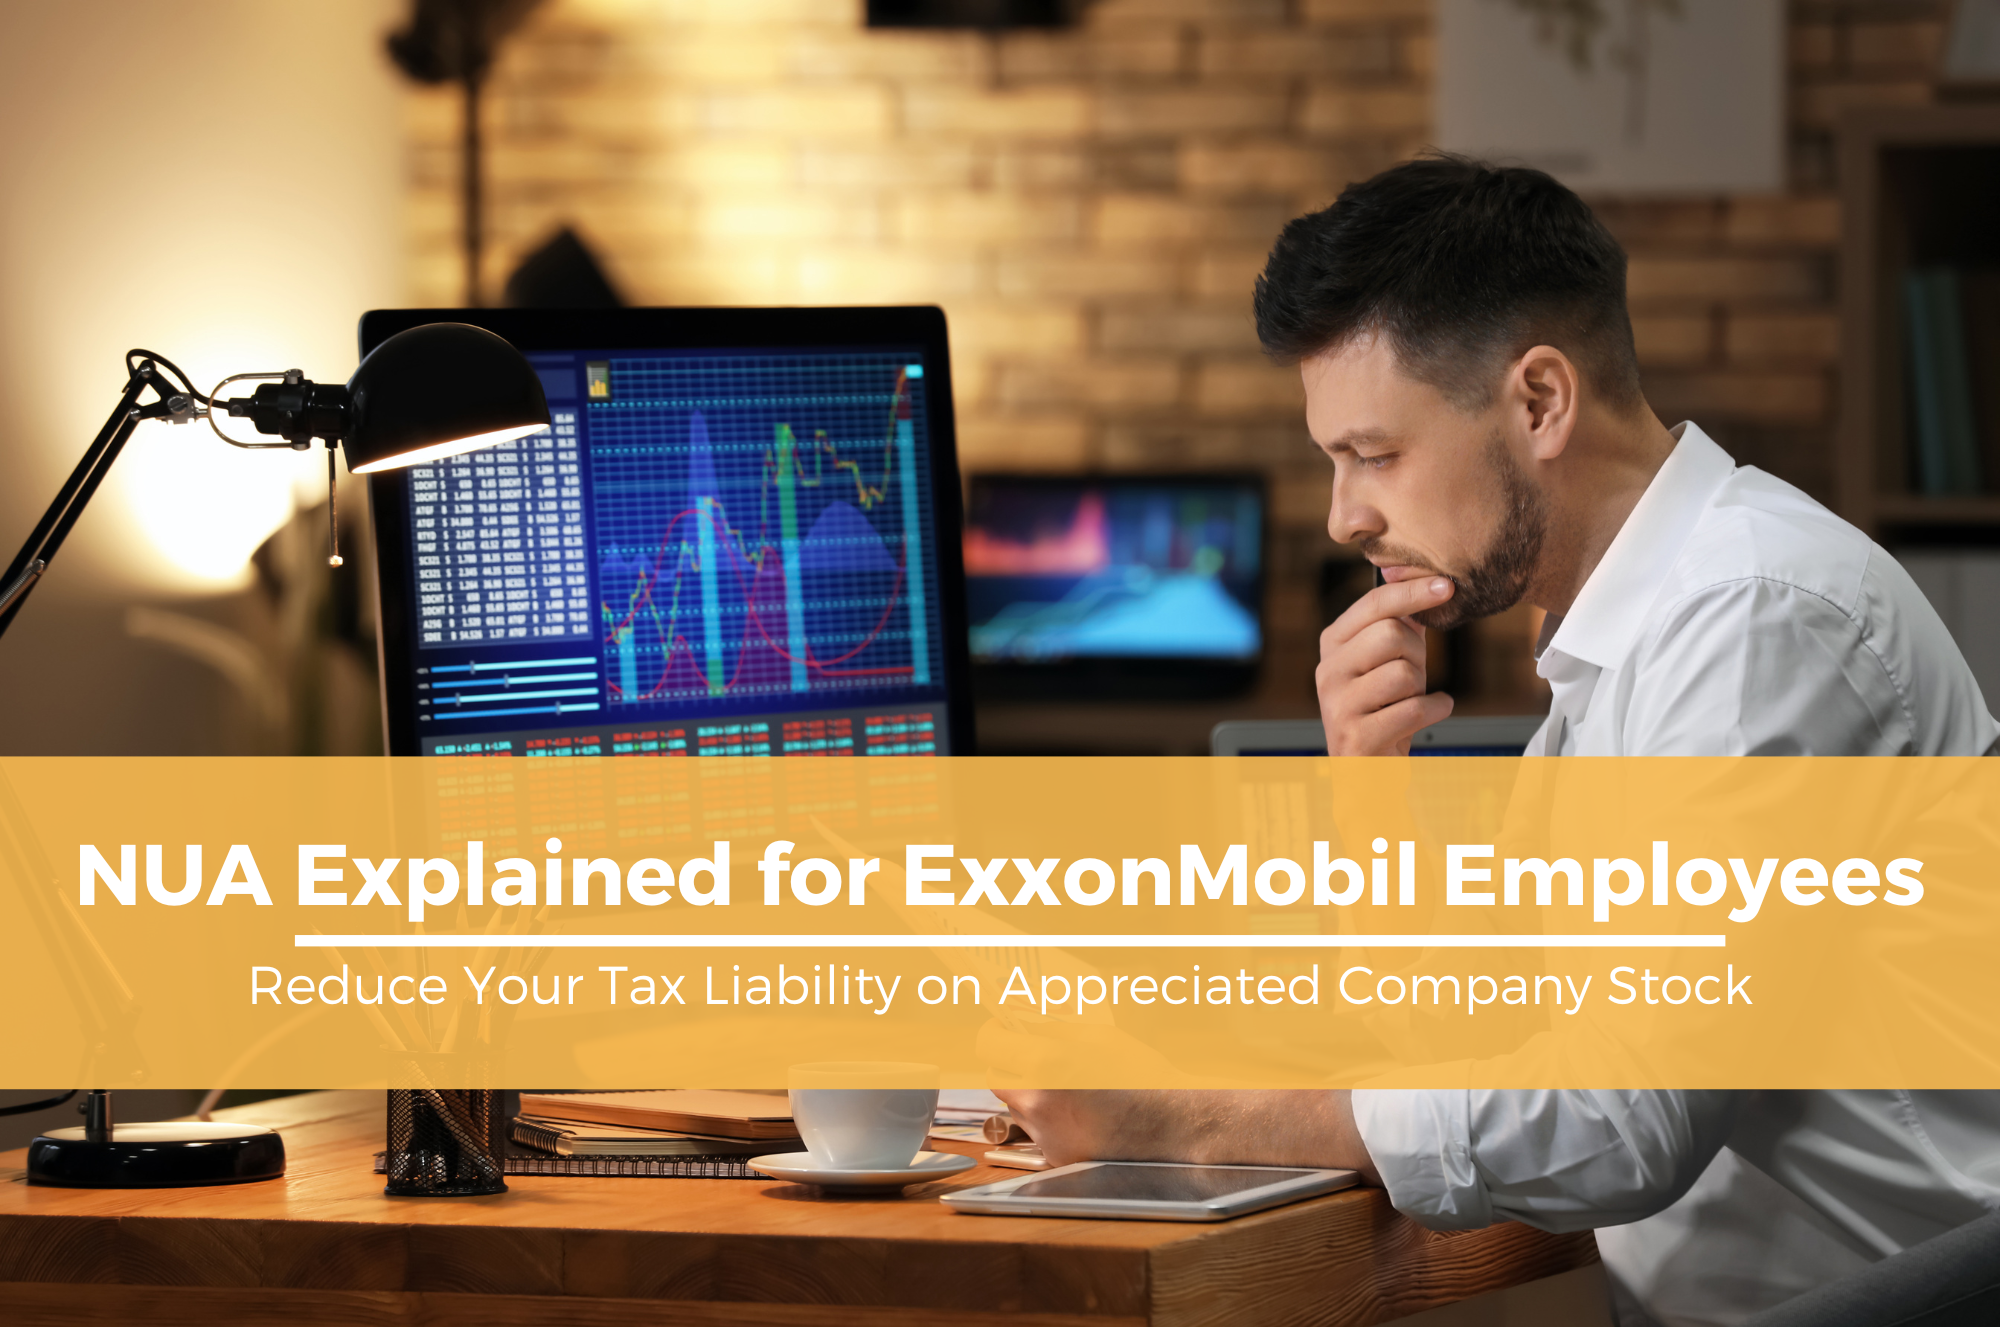 NUA explained for exxonmobil employees